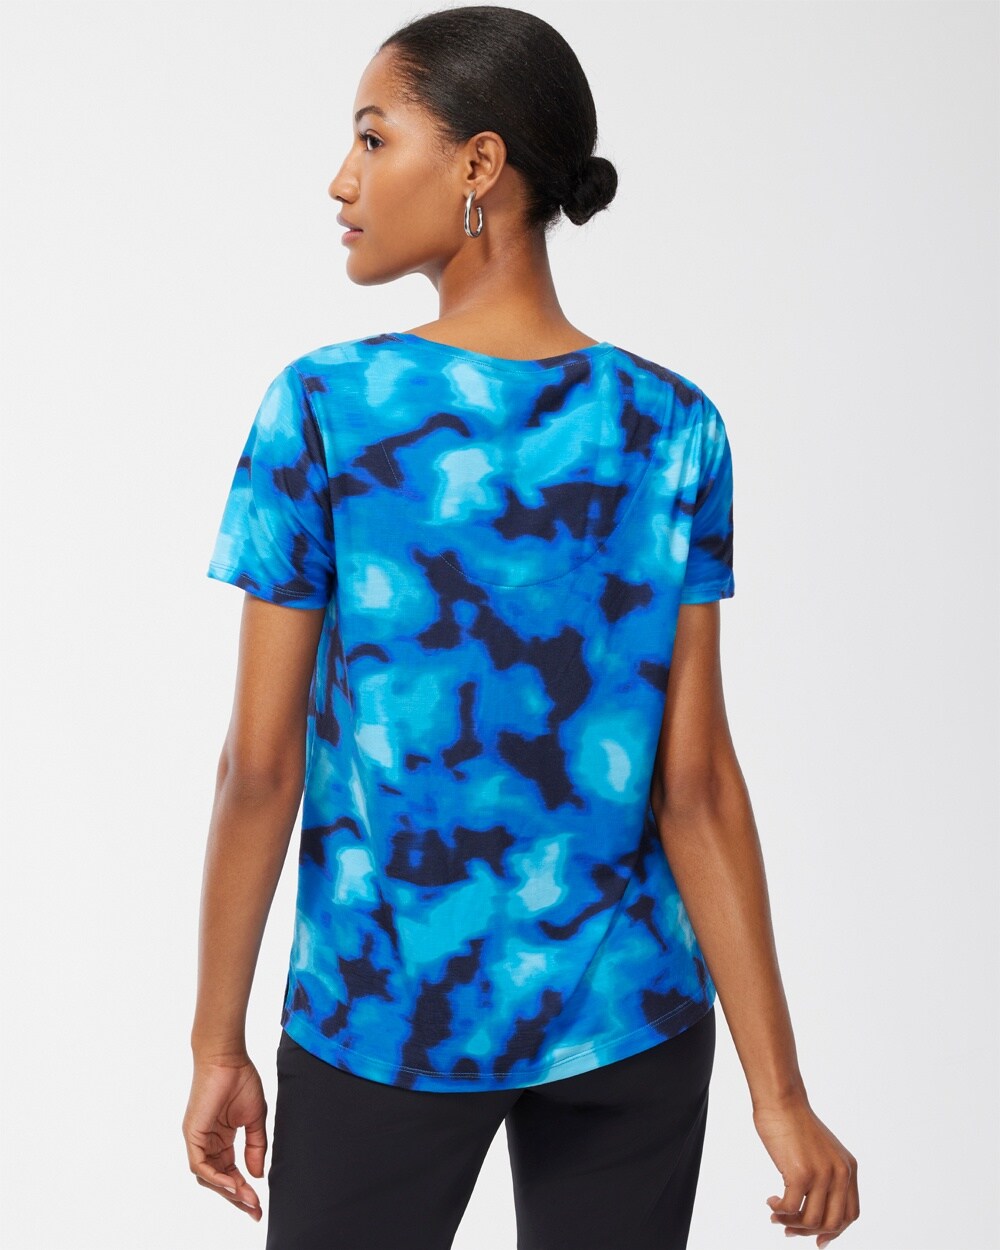 Chico's Women's Tie-Dye Print T-Shirt